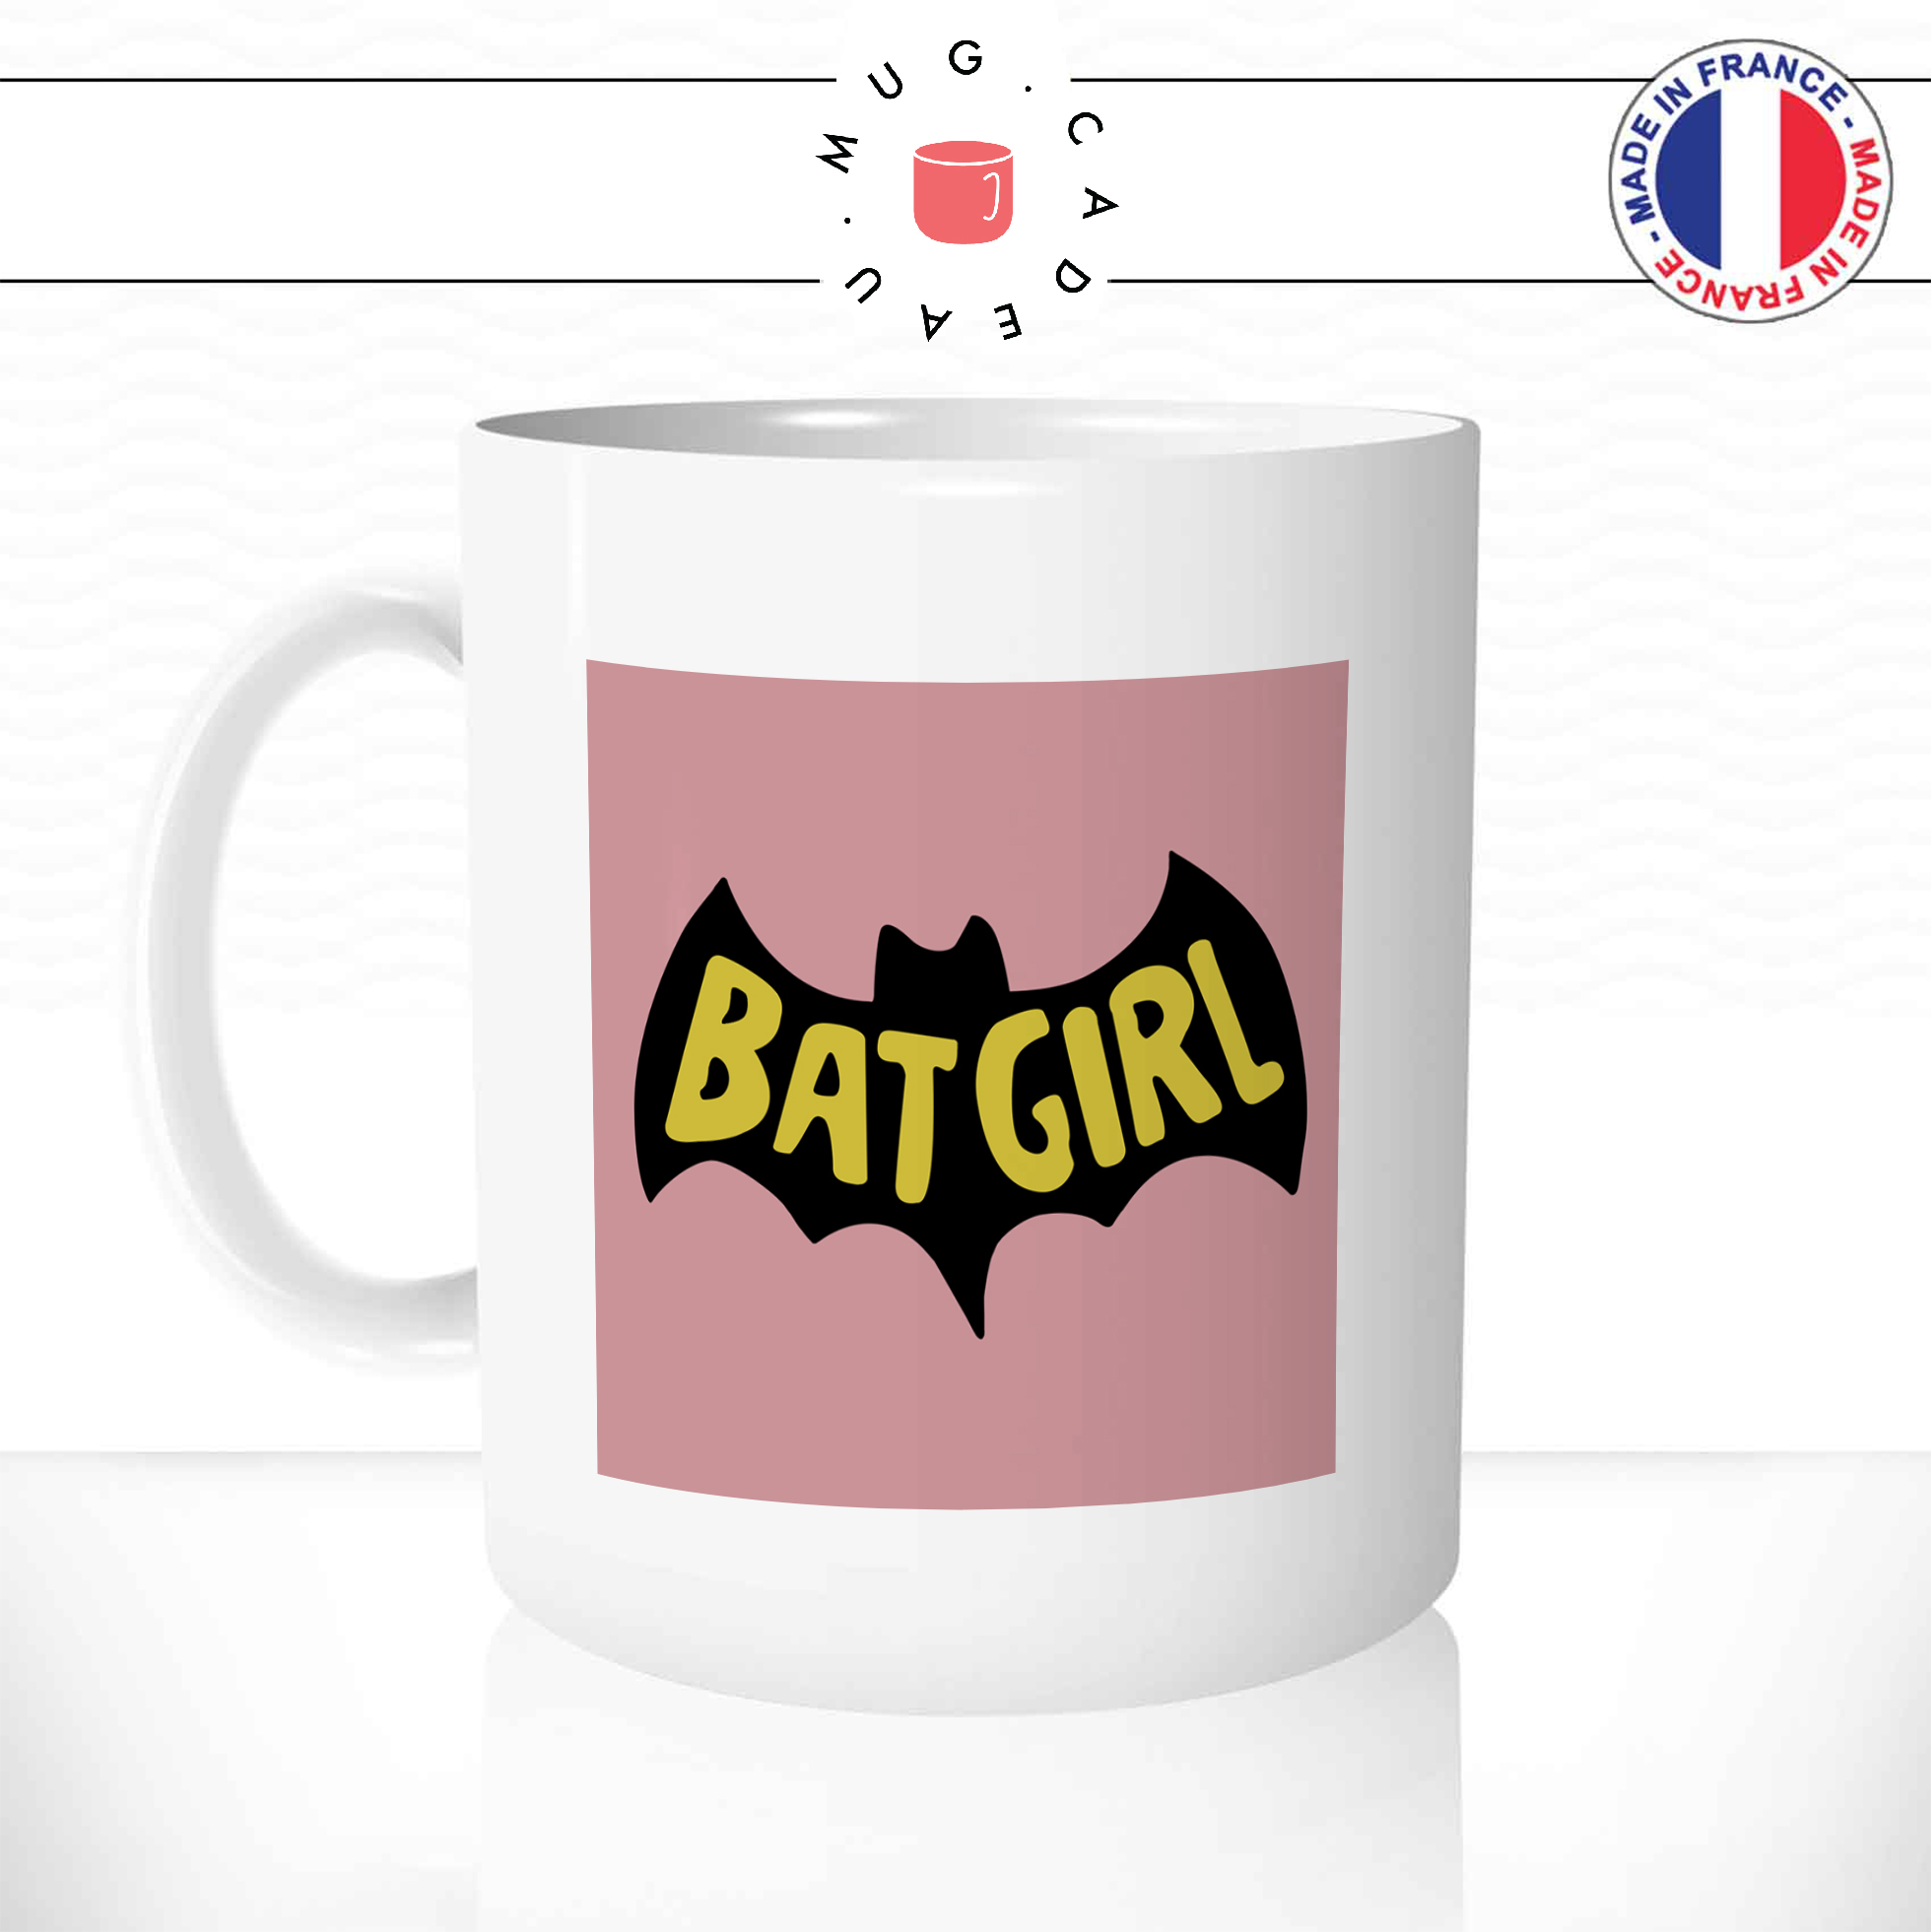 Mug Batgirl